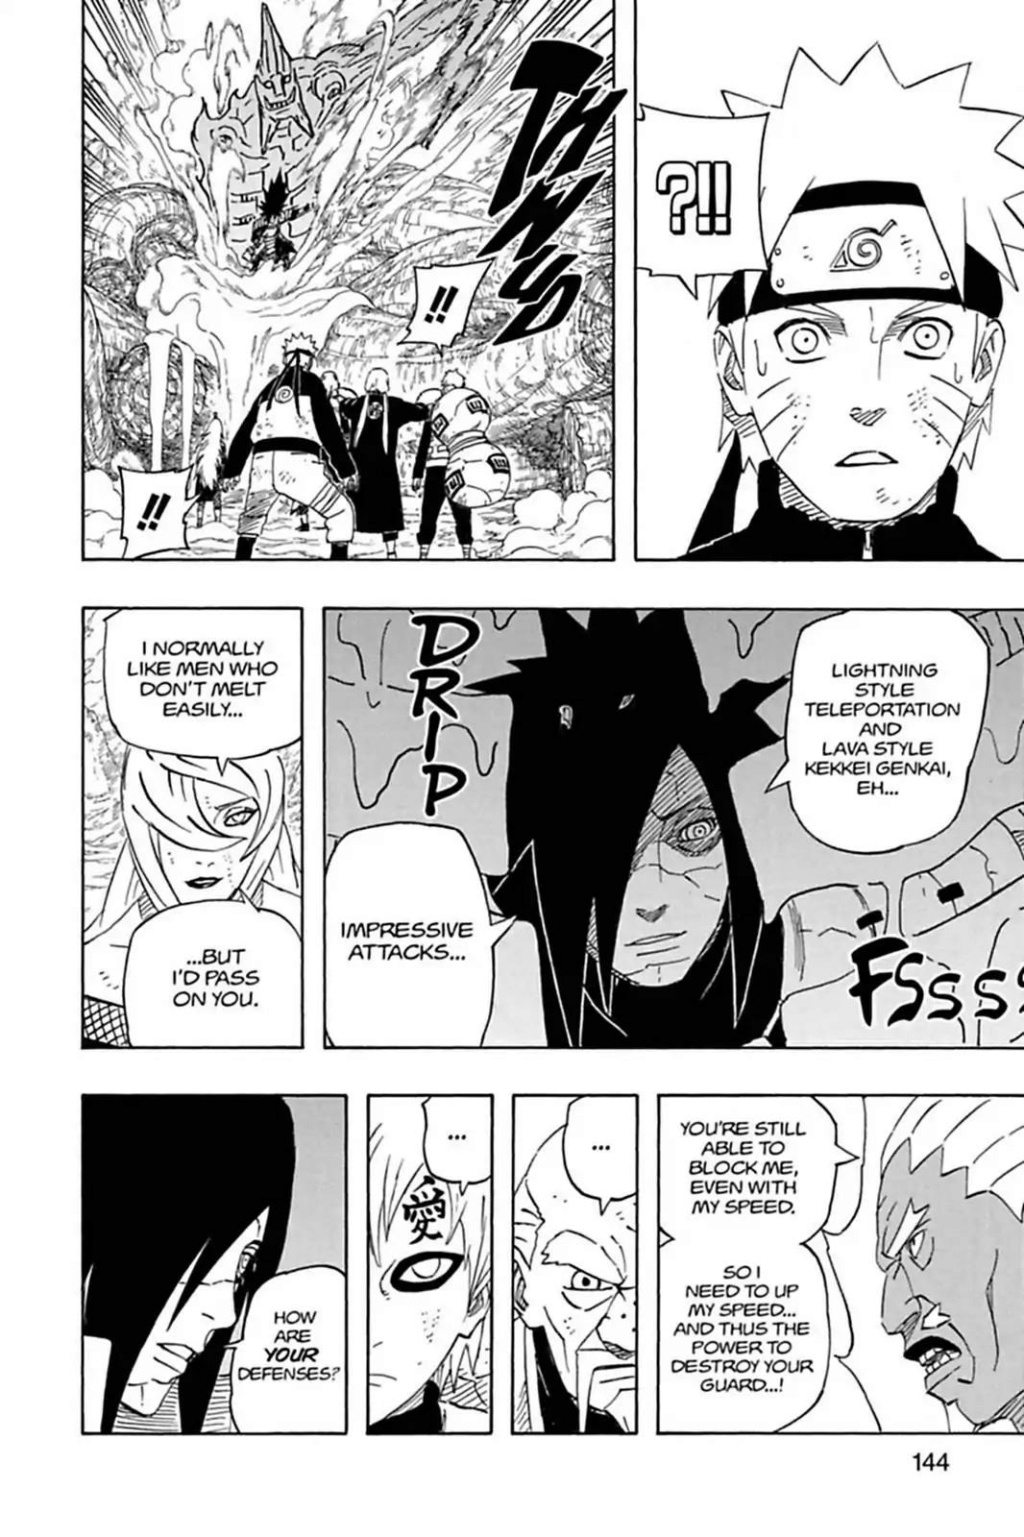 Sakura Novel vs Naruto 4 Caldas - Página 4 08_24111